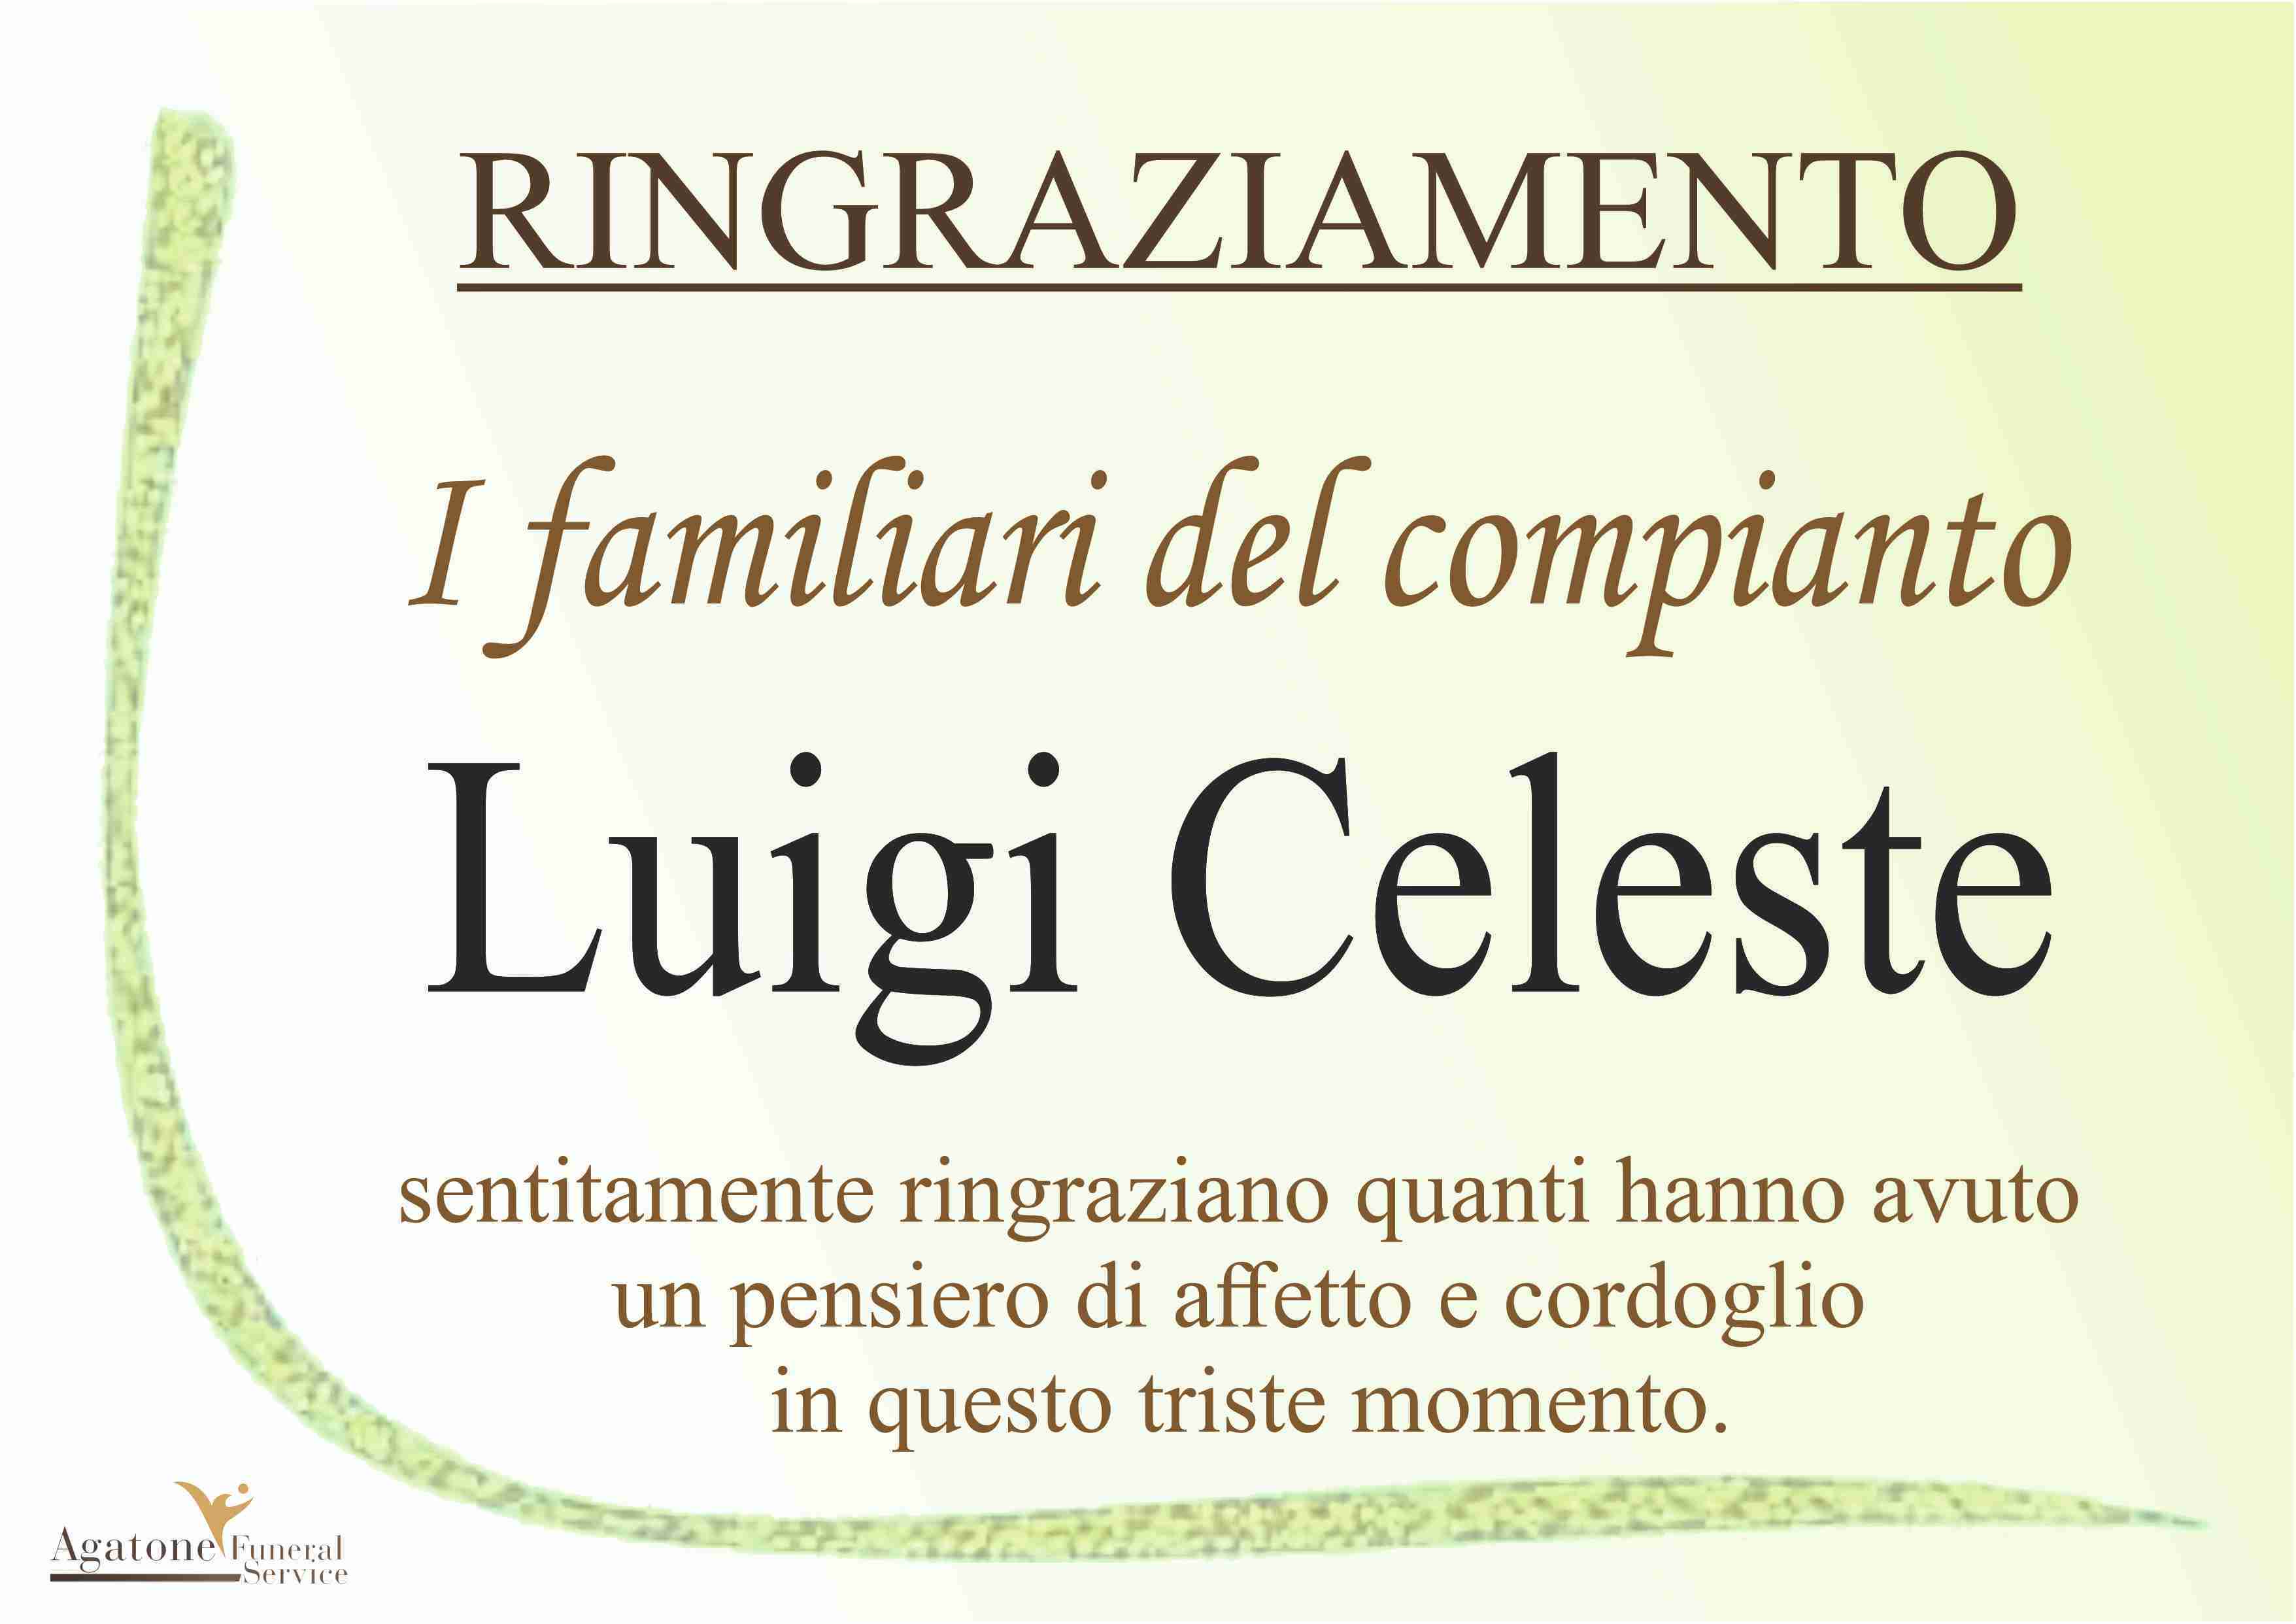 Luigi Celeste